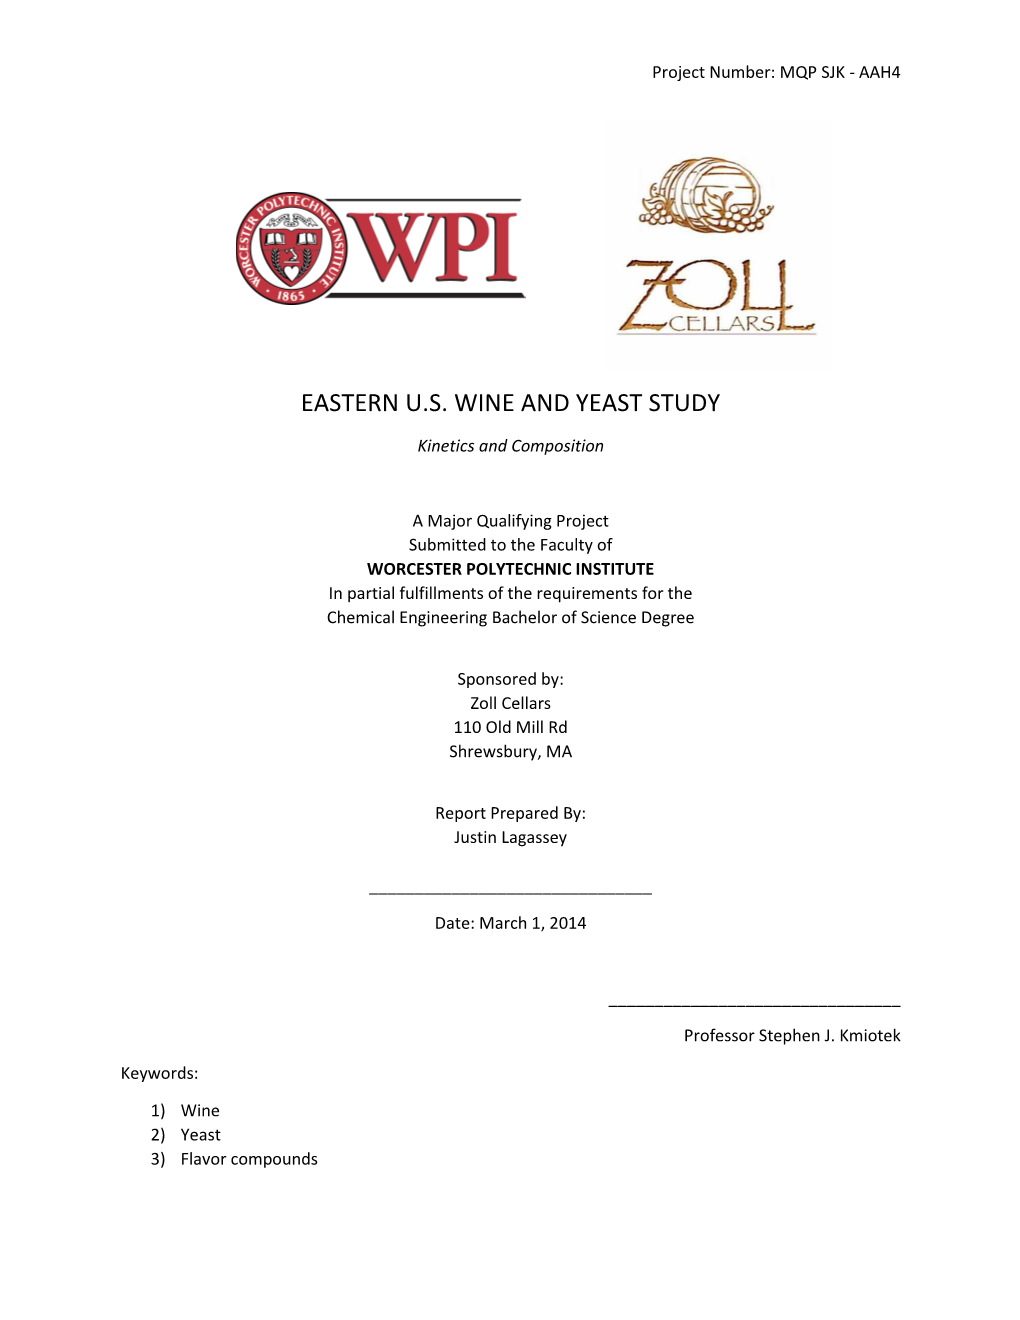 Eastern U.S. Wine and Yeast Study